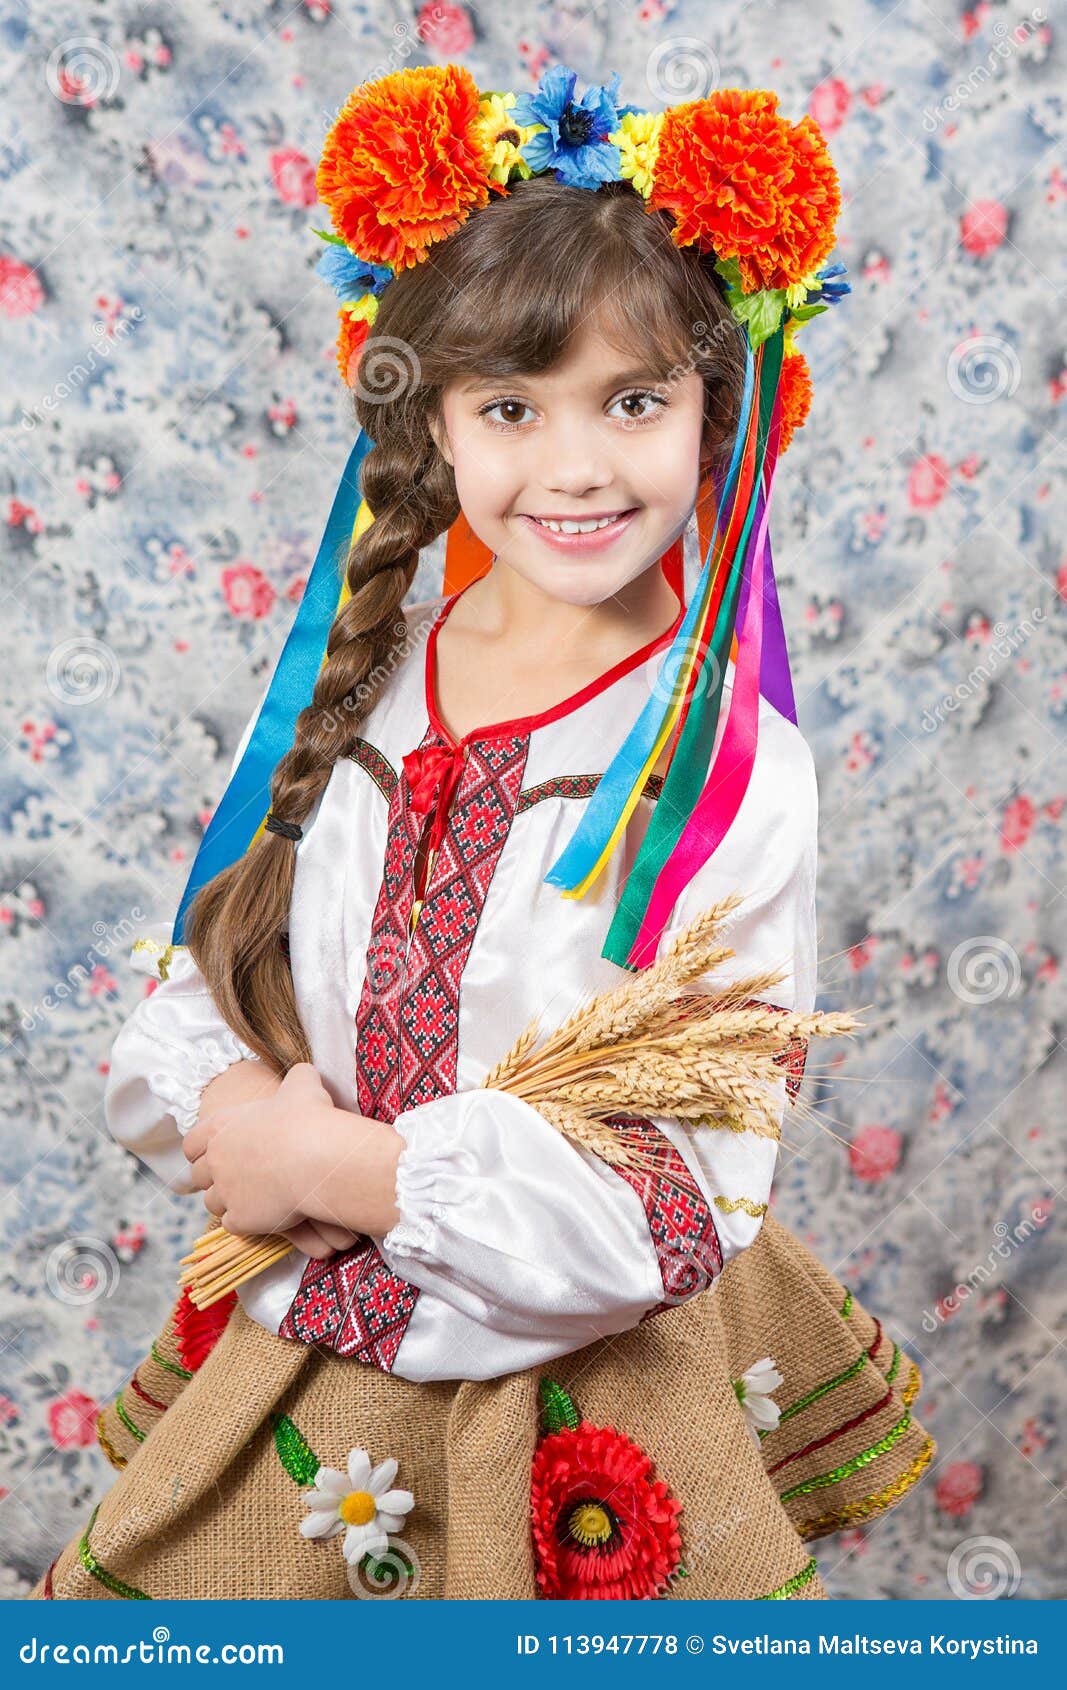 Young Ukraine Girls